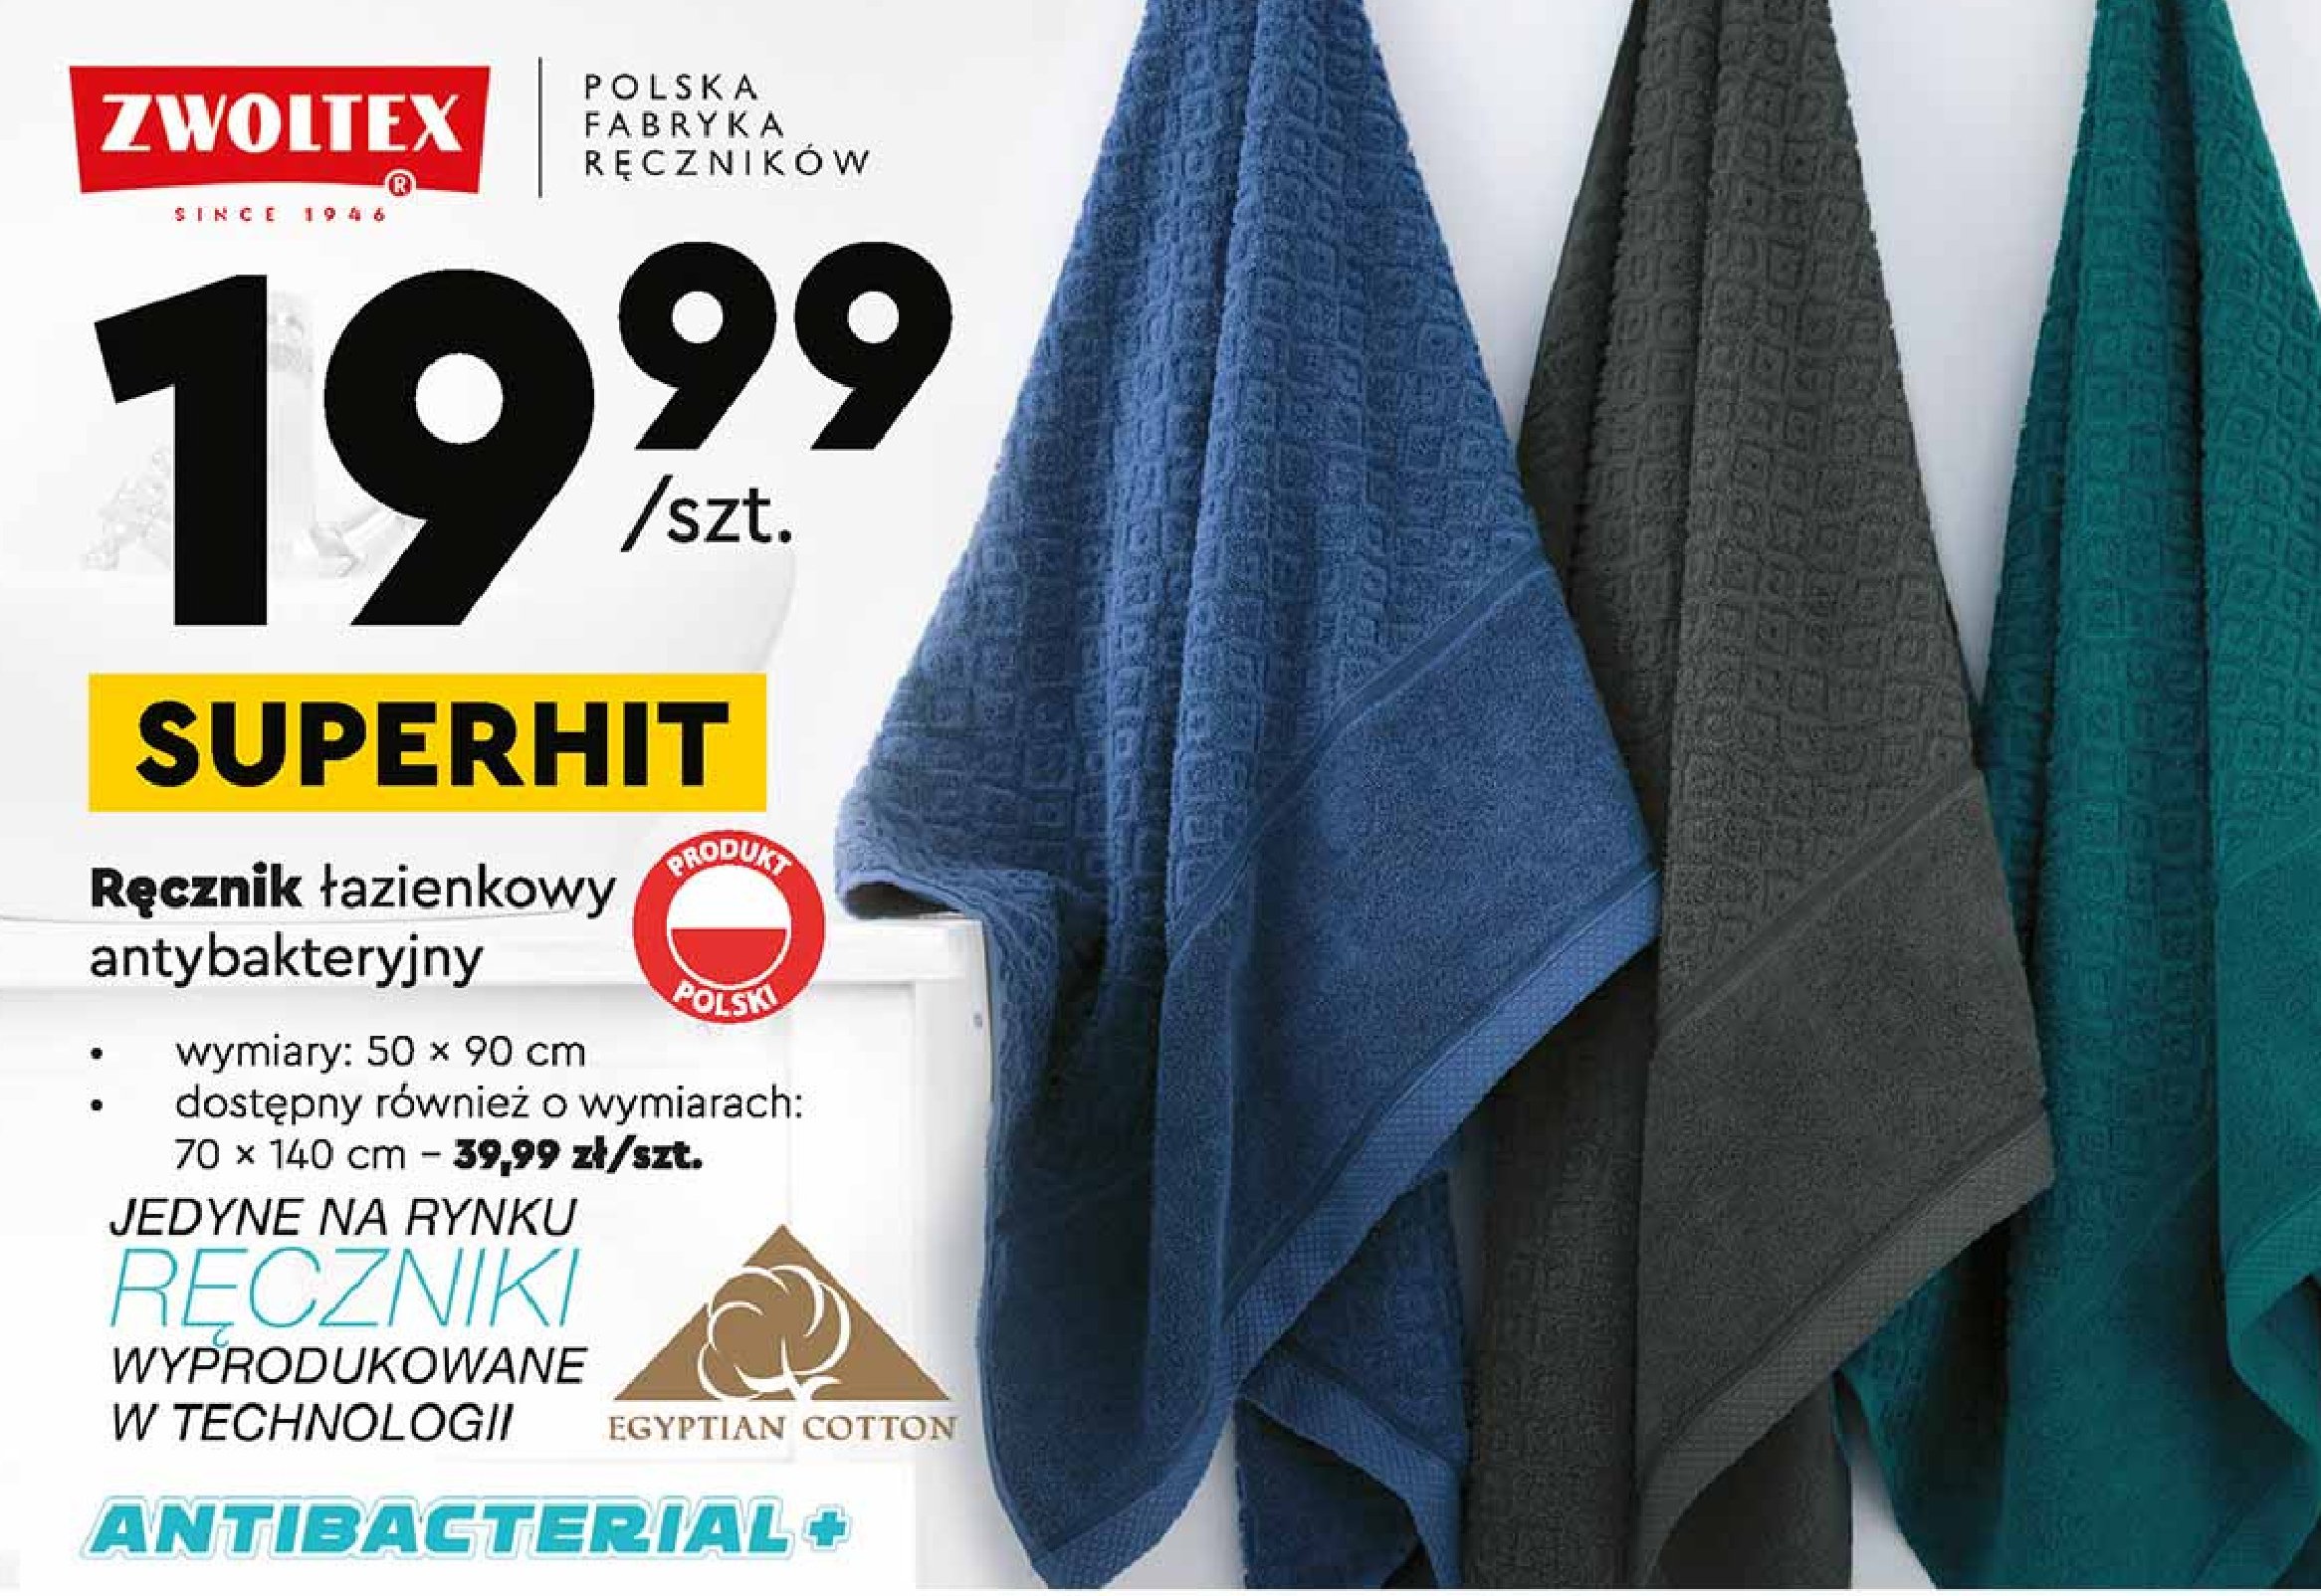 Ręcznik antibacterial 50 x 90 cm bukszpan Zwoltex promocja